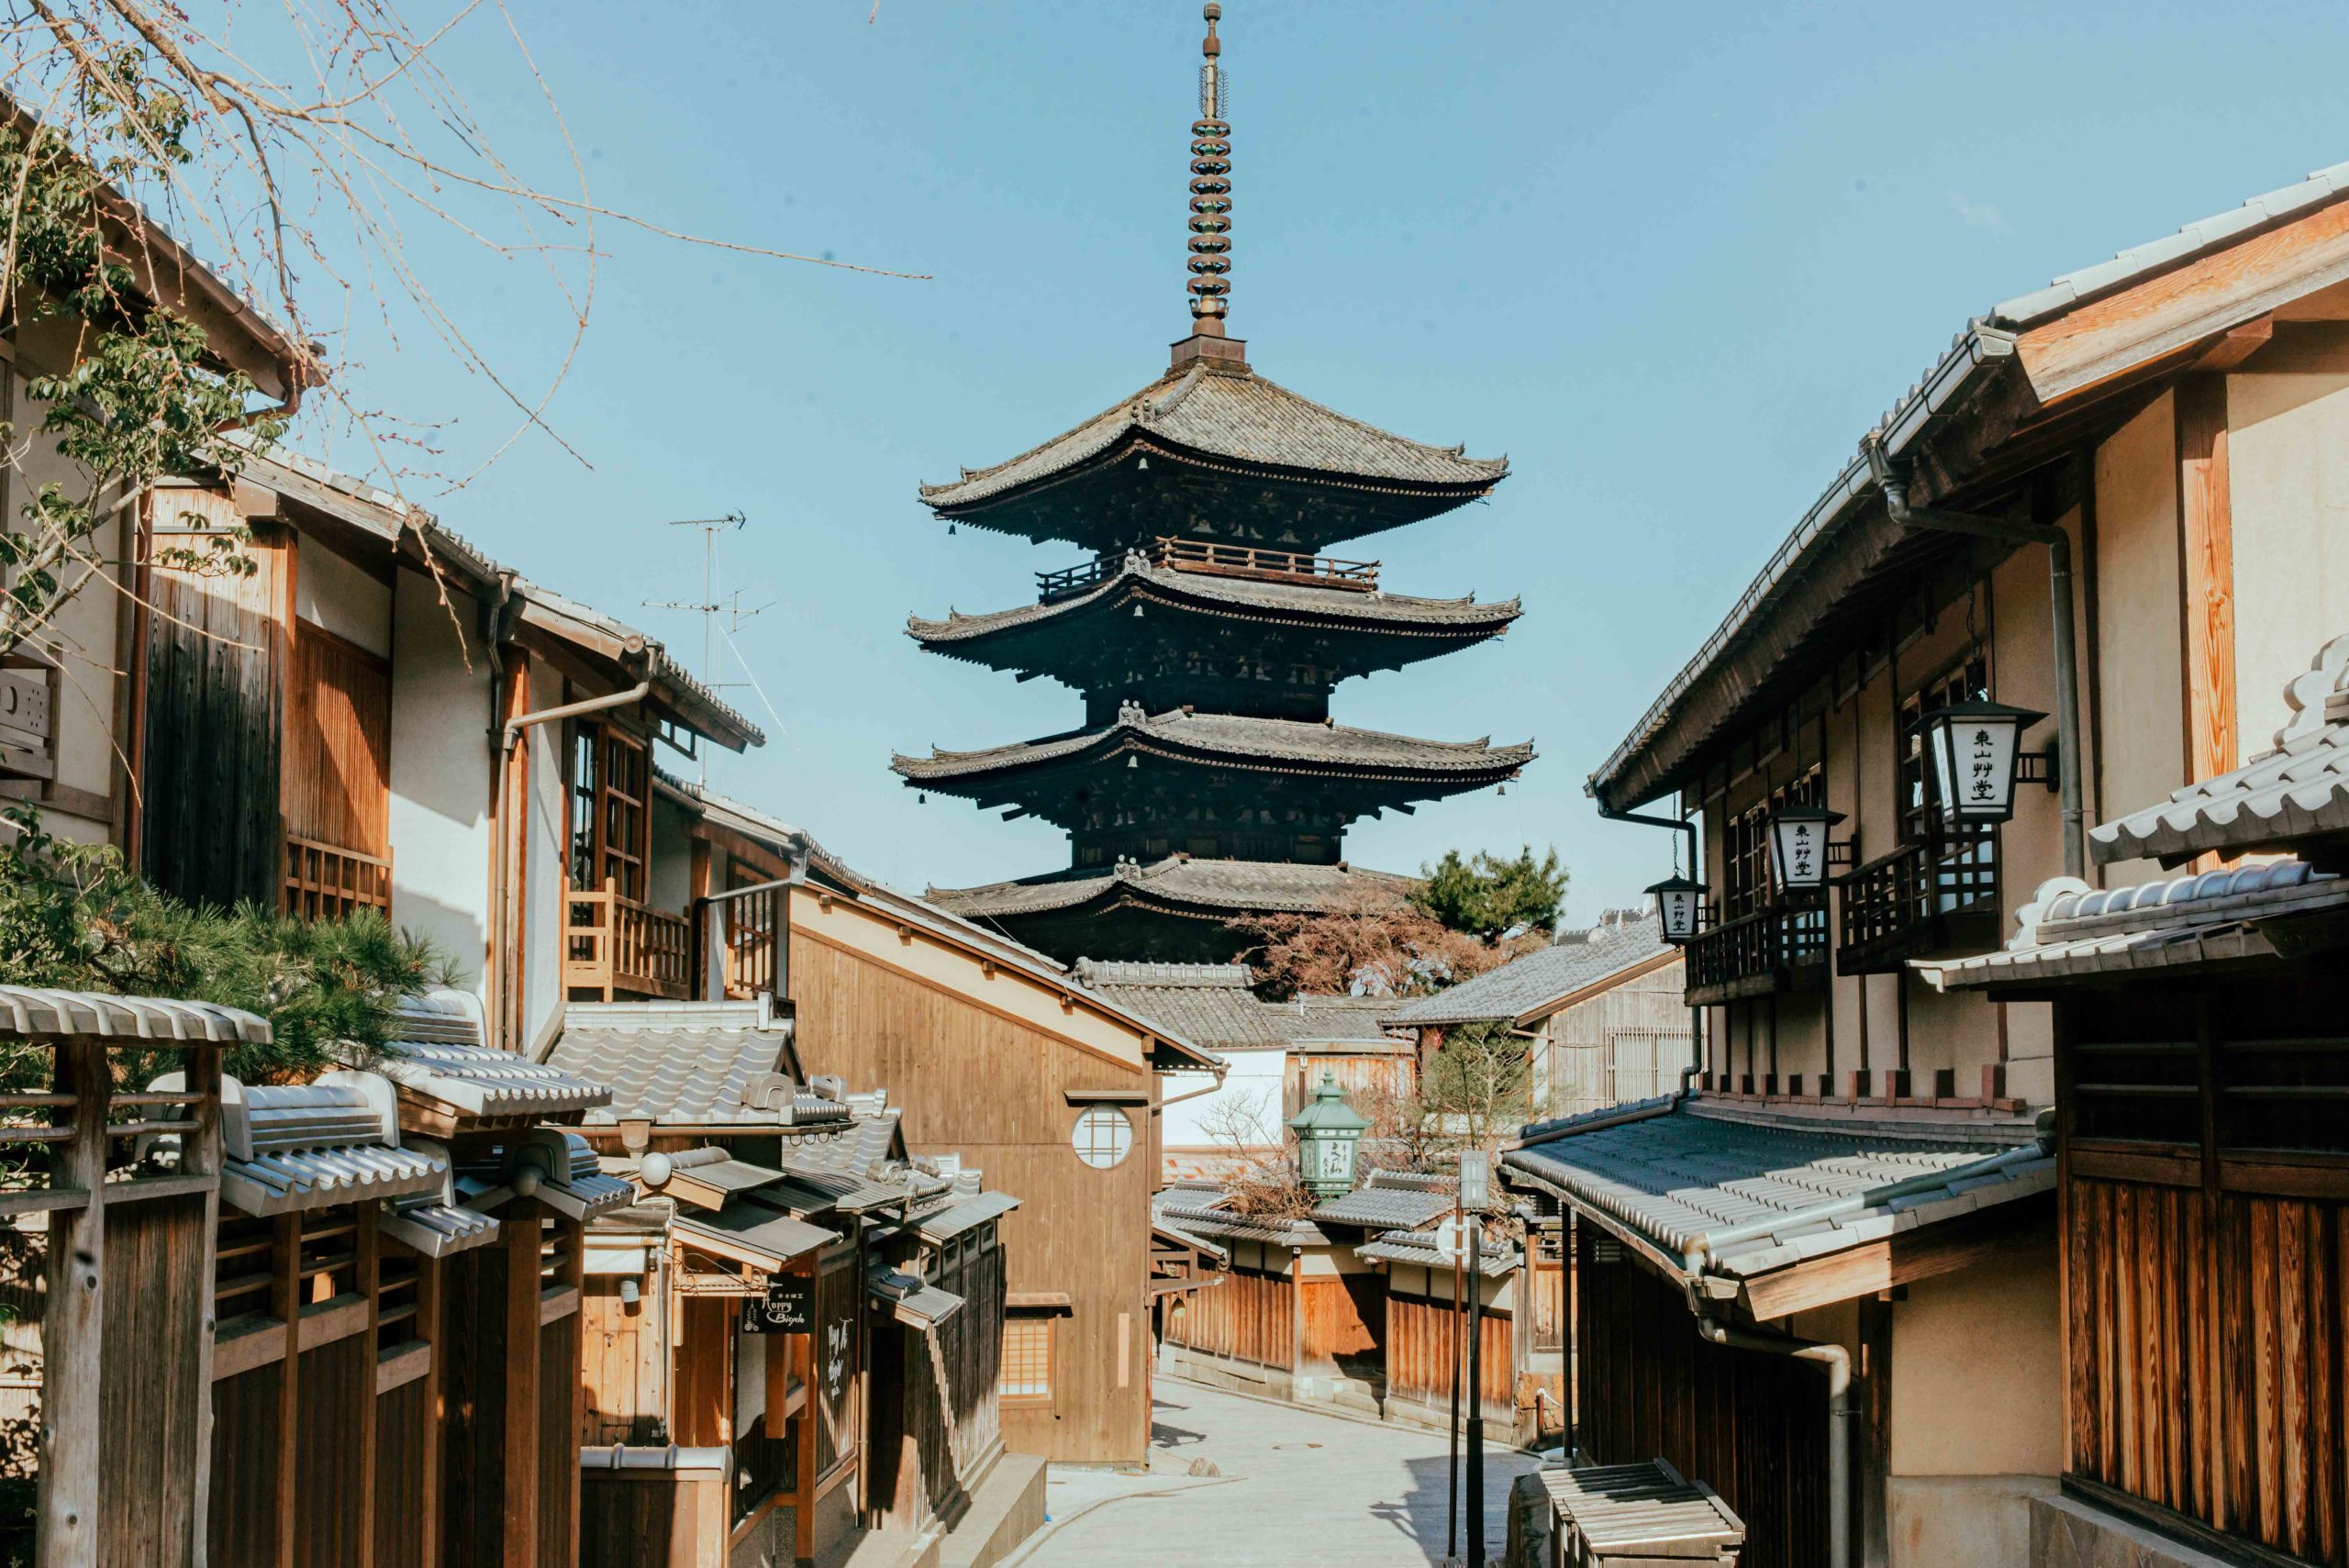 Top 10 Places to Visit in Kyoto Japan - Kyoto Photographer l Kai Nagayama